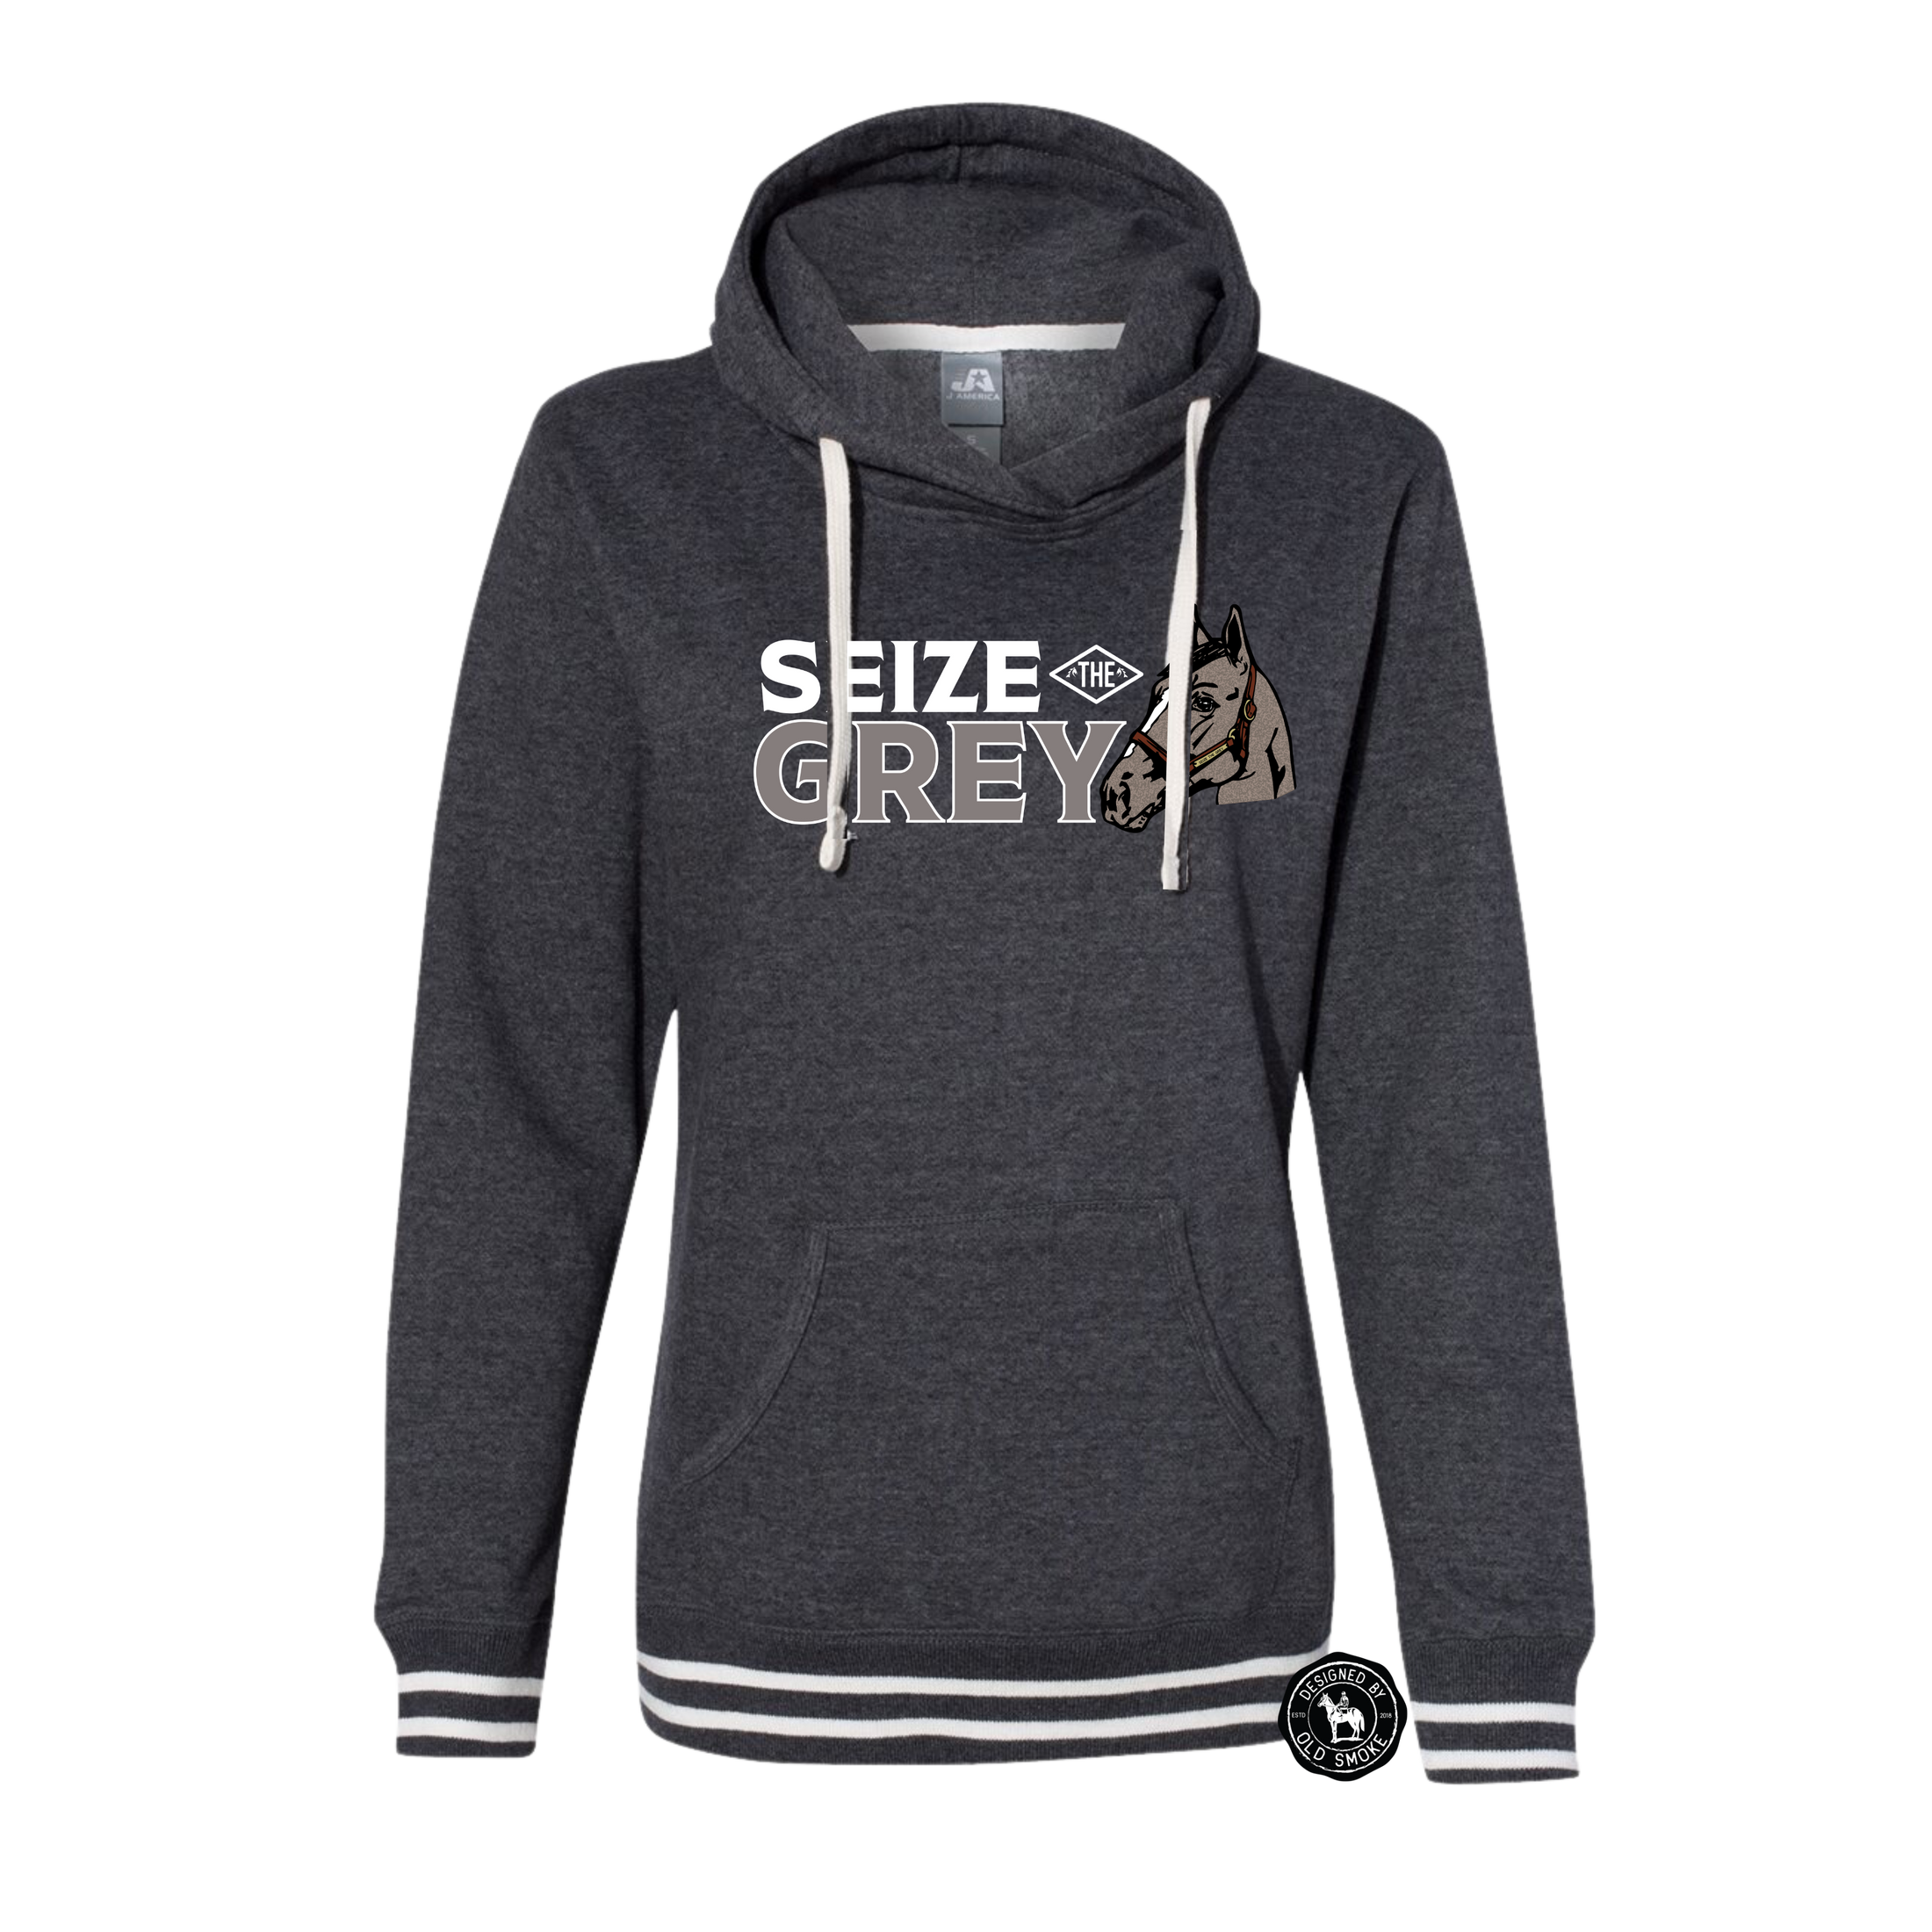 Seize the Grey Women's Hooded Sweatshirt